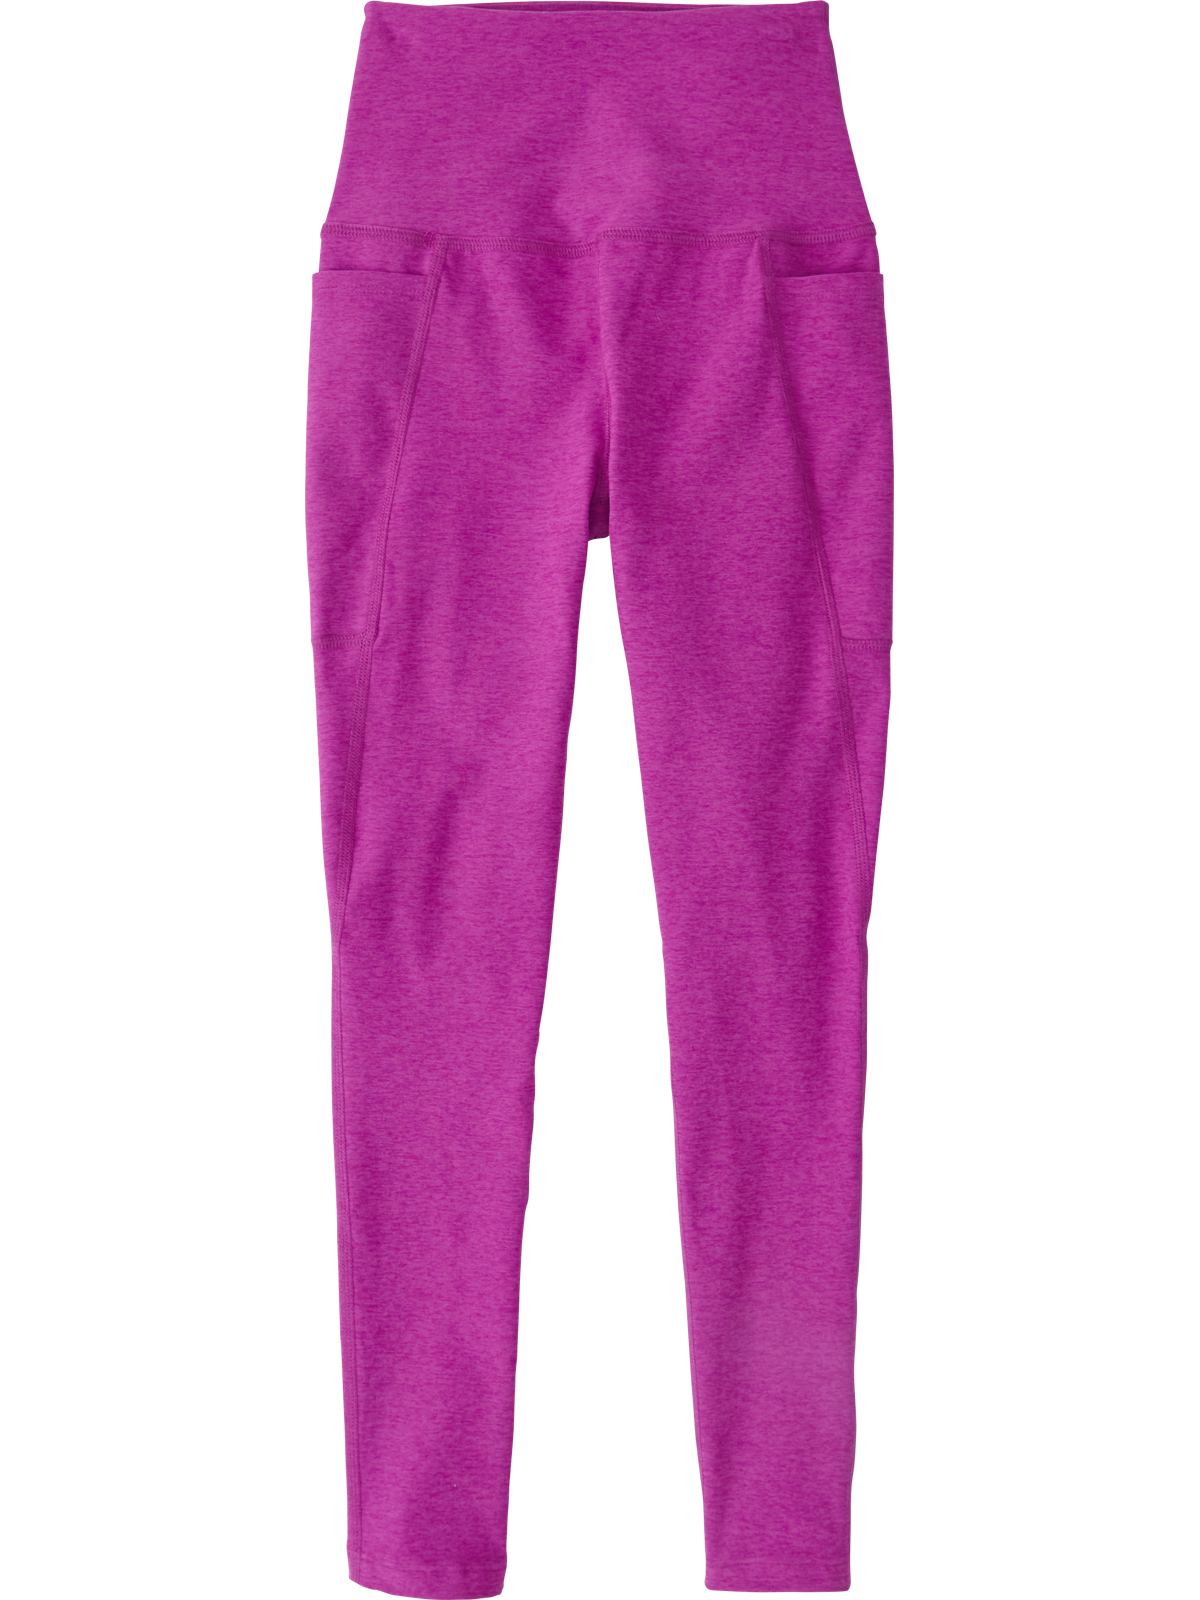 leggings for women with pockets purple : RAYPOSE Women's Workout Running  Capris Leggings Pock